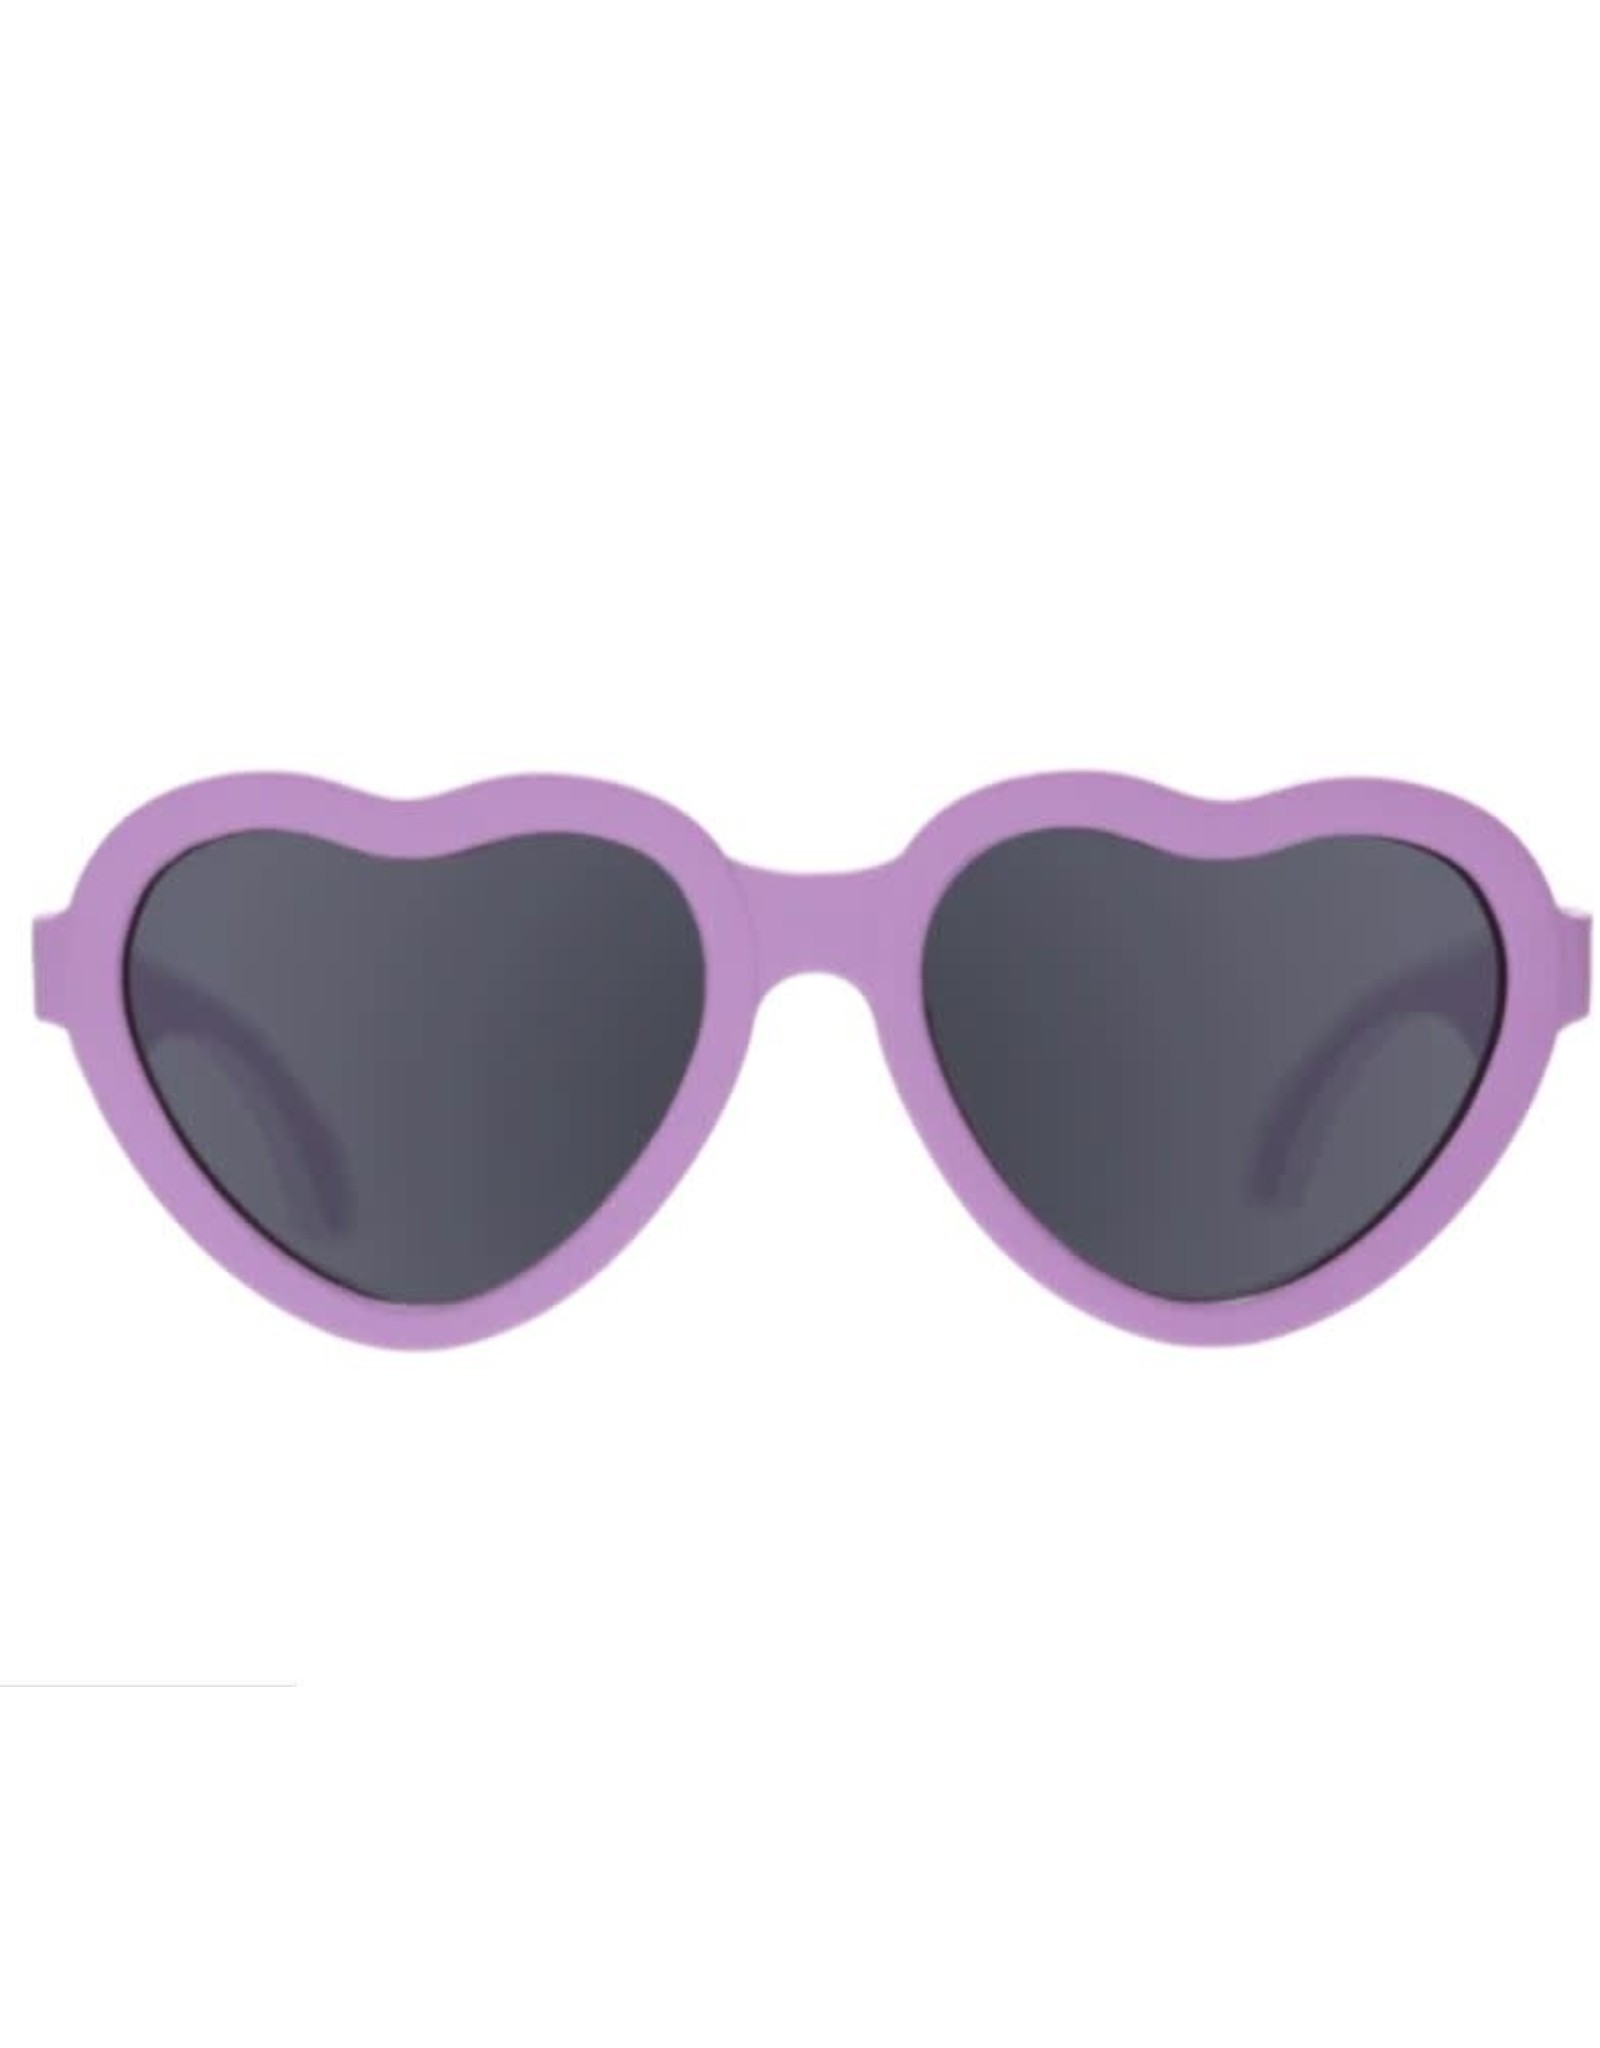 Babiators "Ooh La Lavender" Hearts Sunglasses